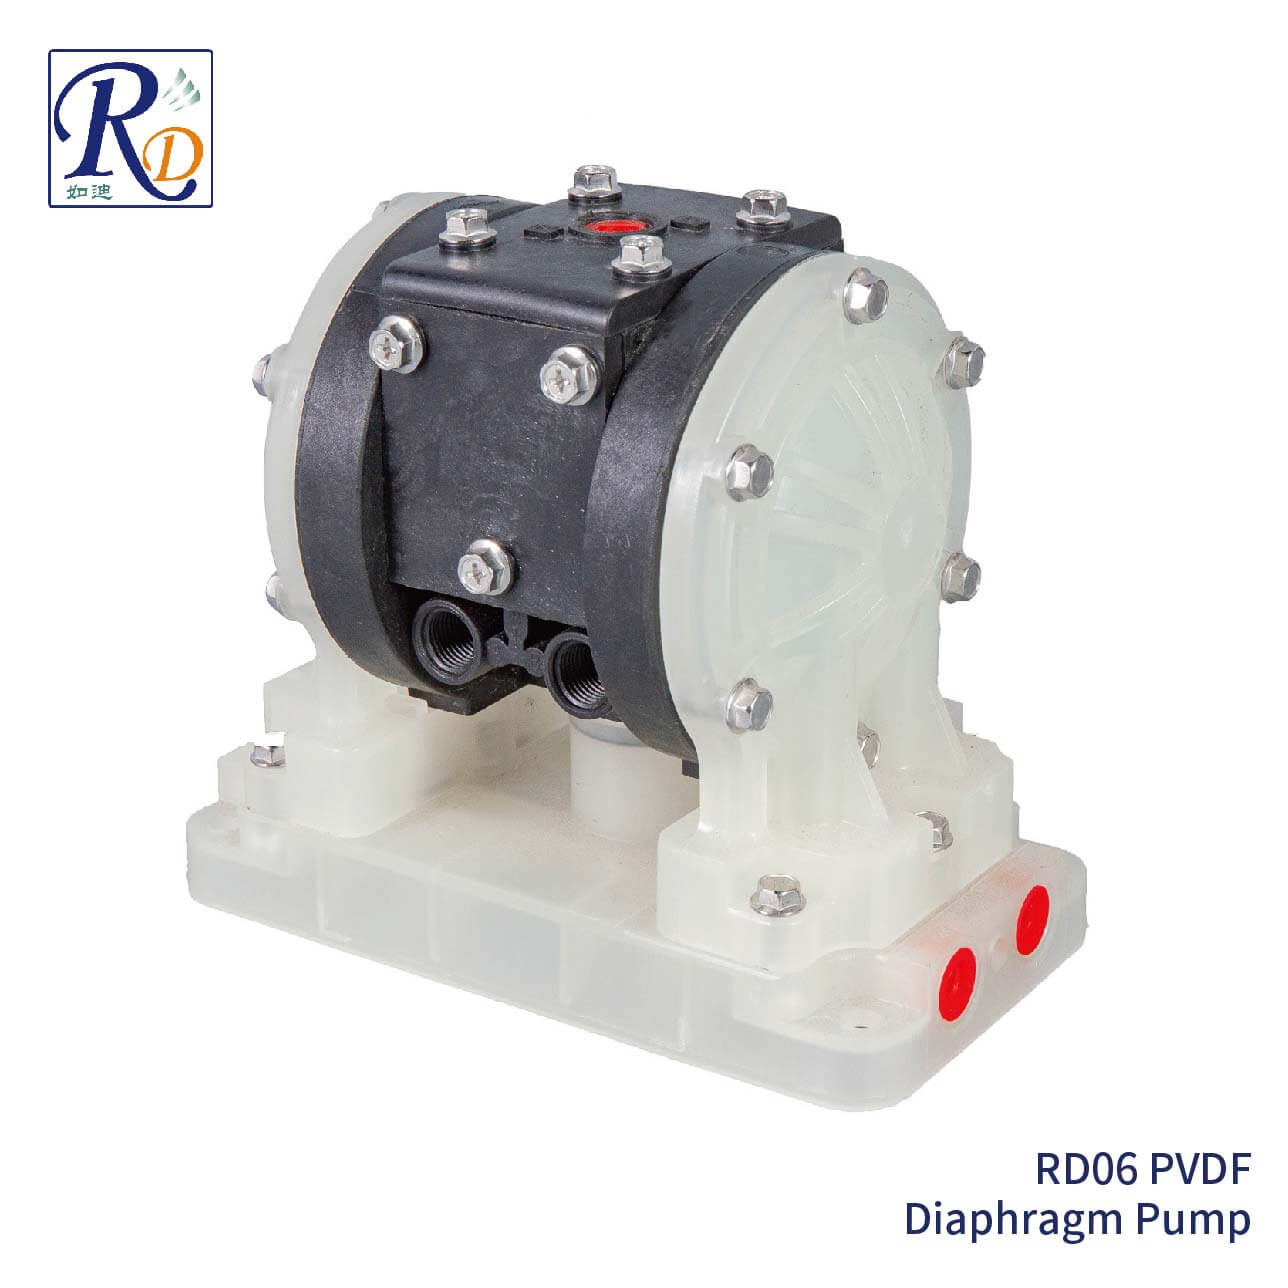 RD06 PVDF Diaphragm Pump